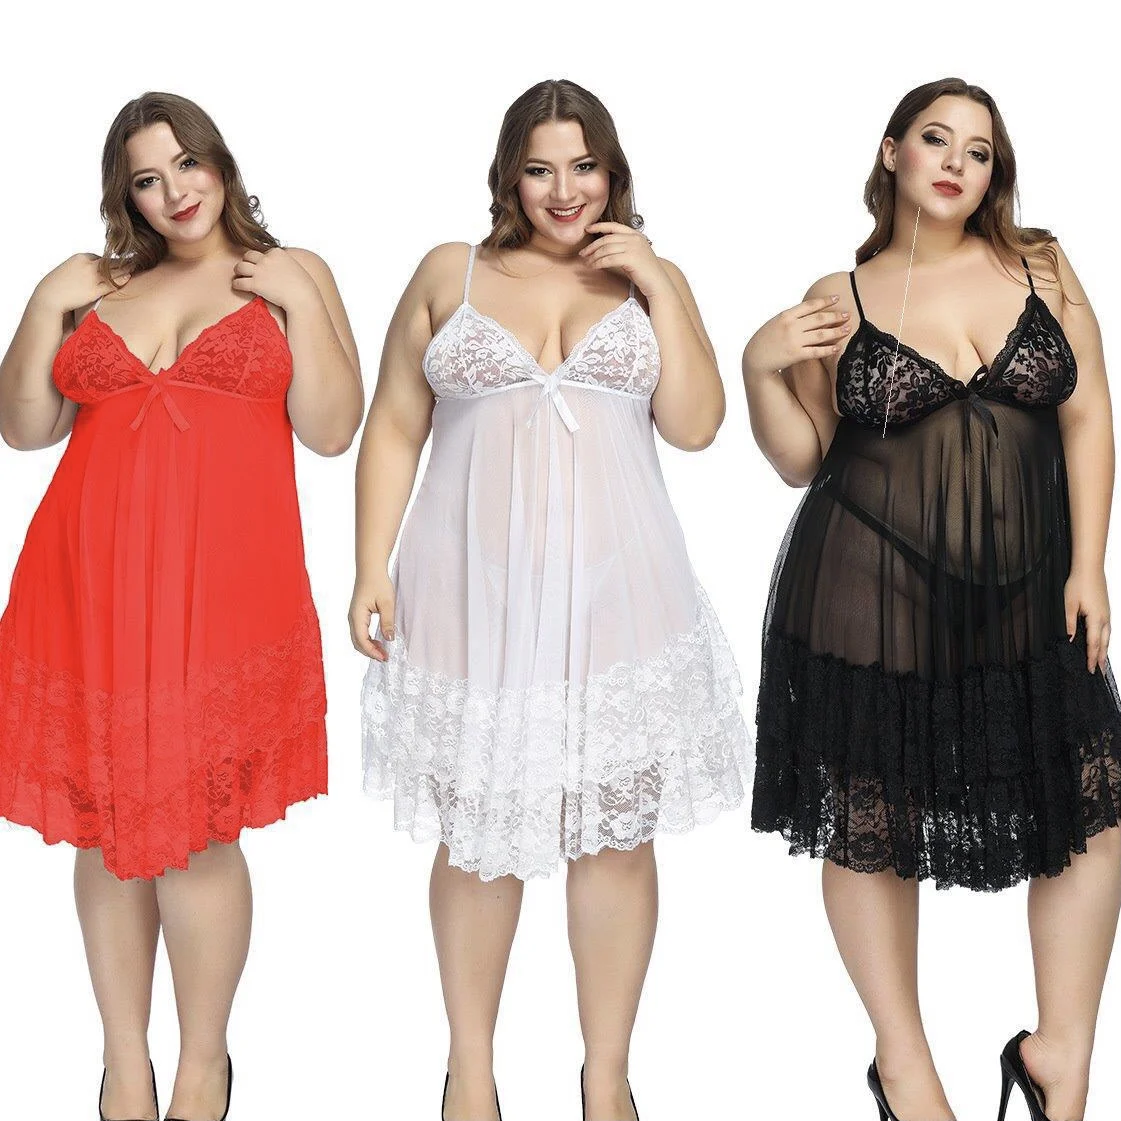 

Iridescent Wholesale Plus Size Pics Sexy Girls Nighty Women Negligee Lingerie Mature Babydoll Set